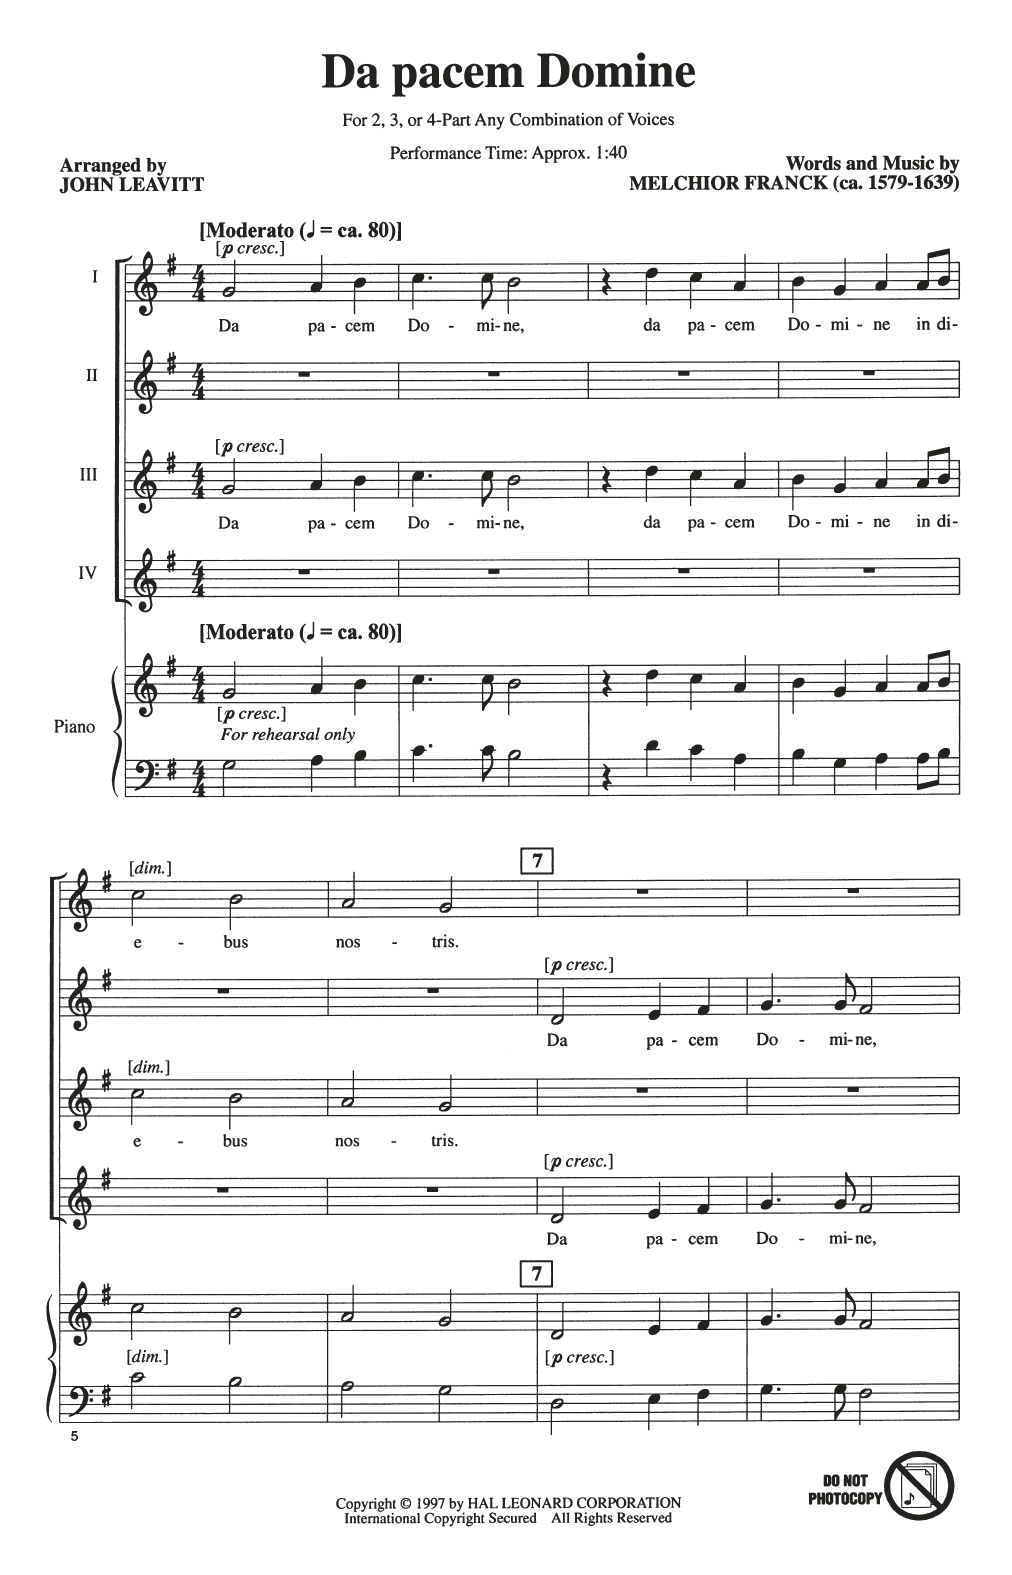 Melchior Franck Da Pacem Domine (arr. John Leavitt) sheet music notes and chords arranged for 4-Part Choir